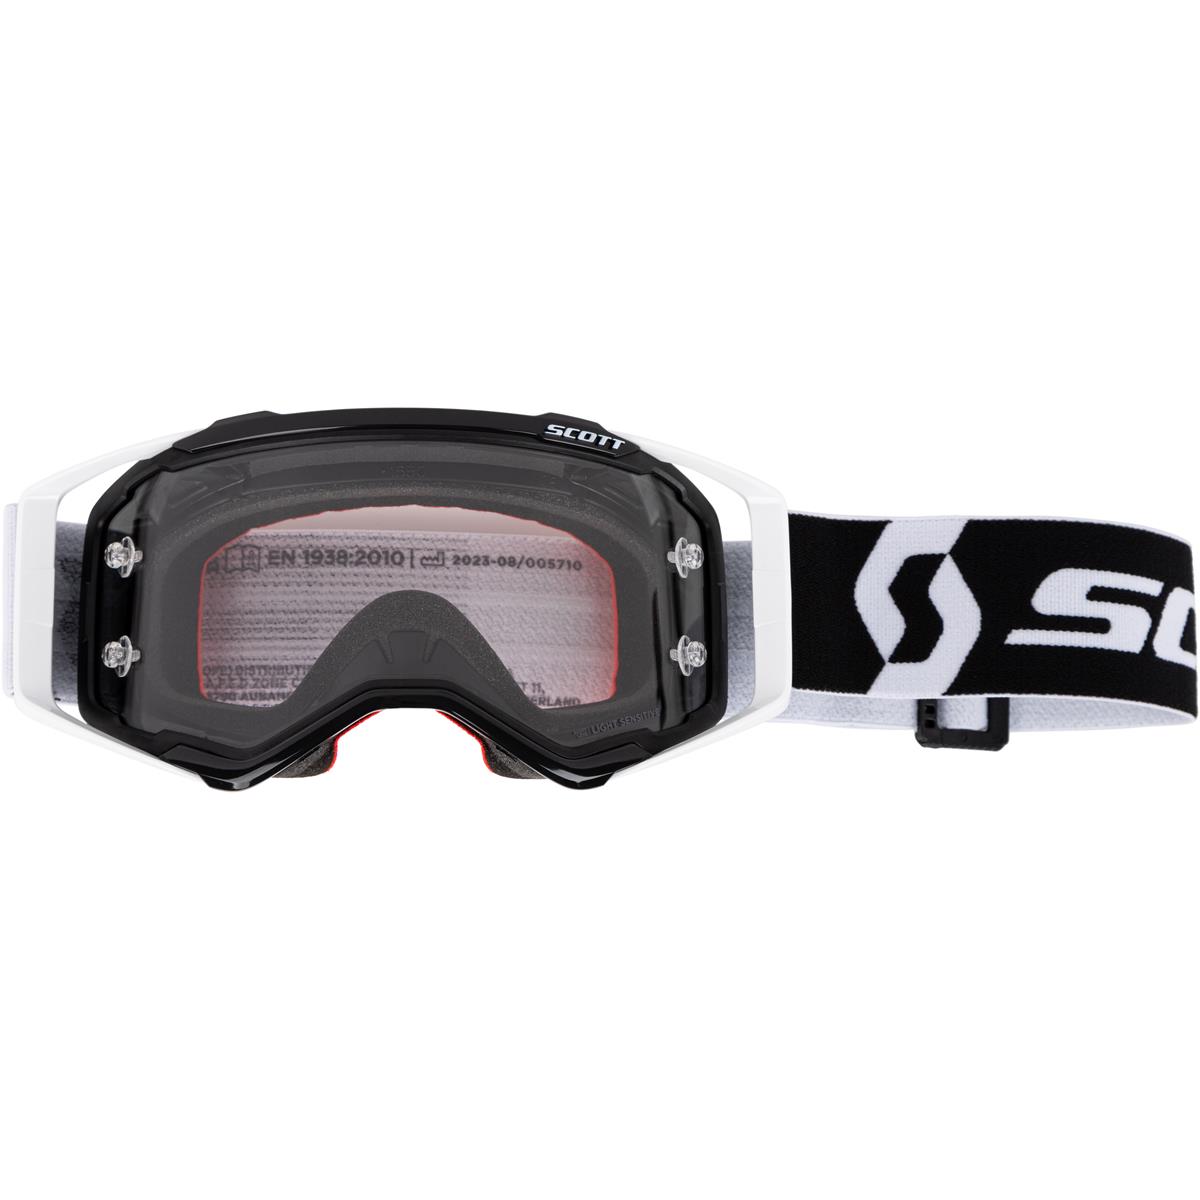 Scott Goggle Prospect Sand Dust LS Premium Black/White - Light Sensitive Gray Work